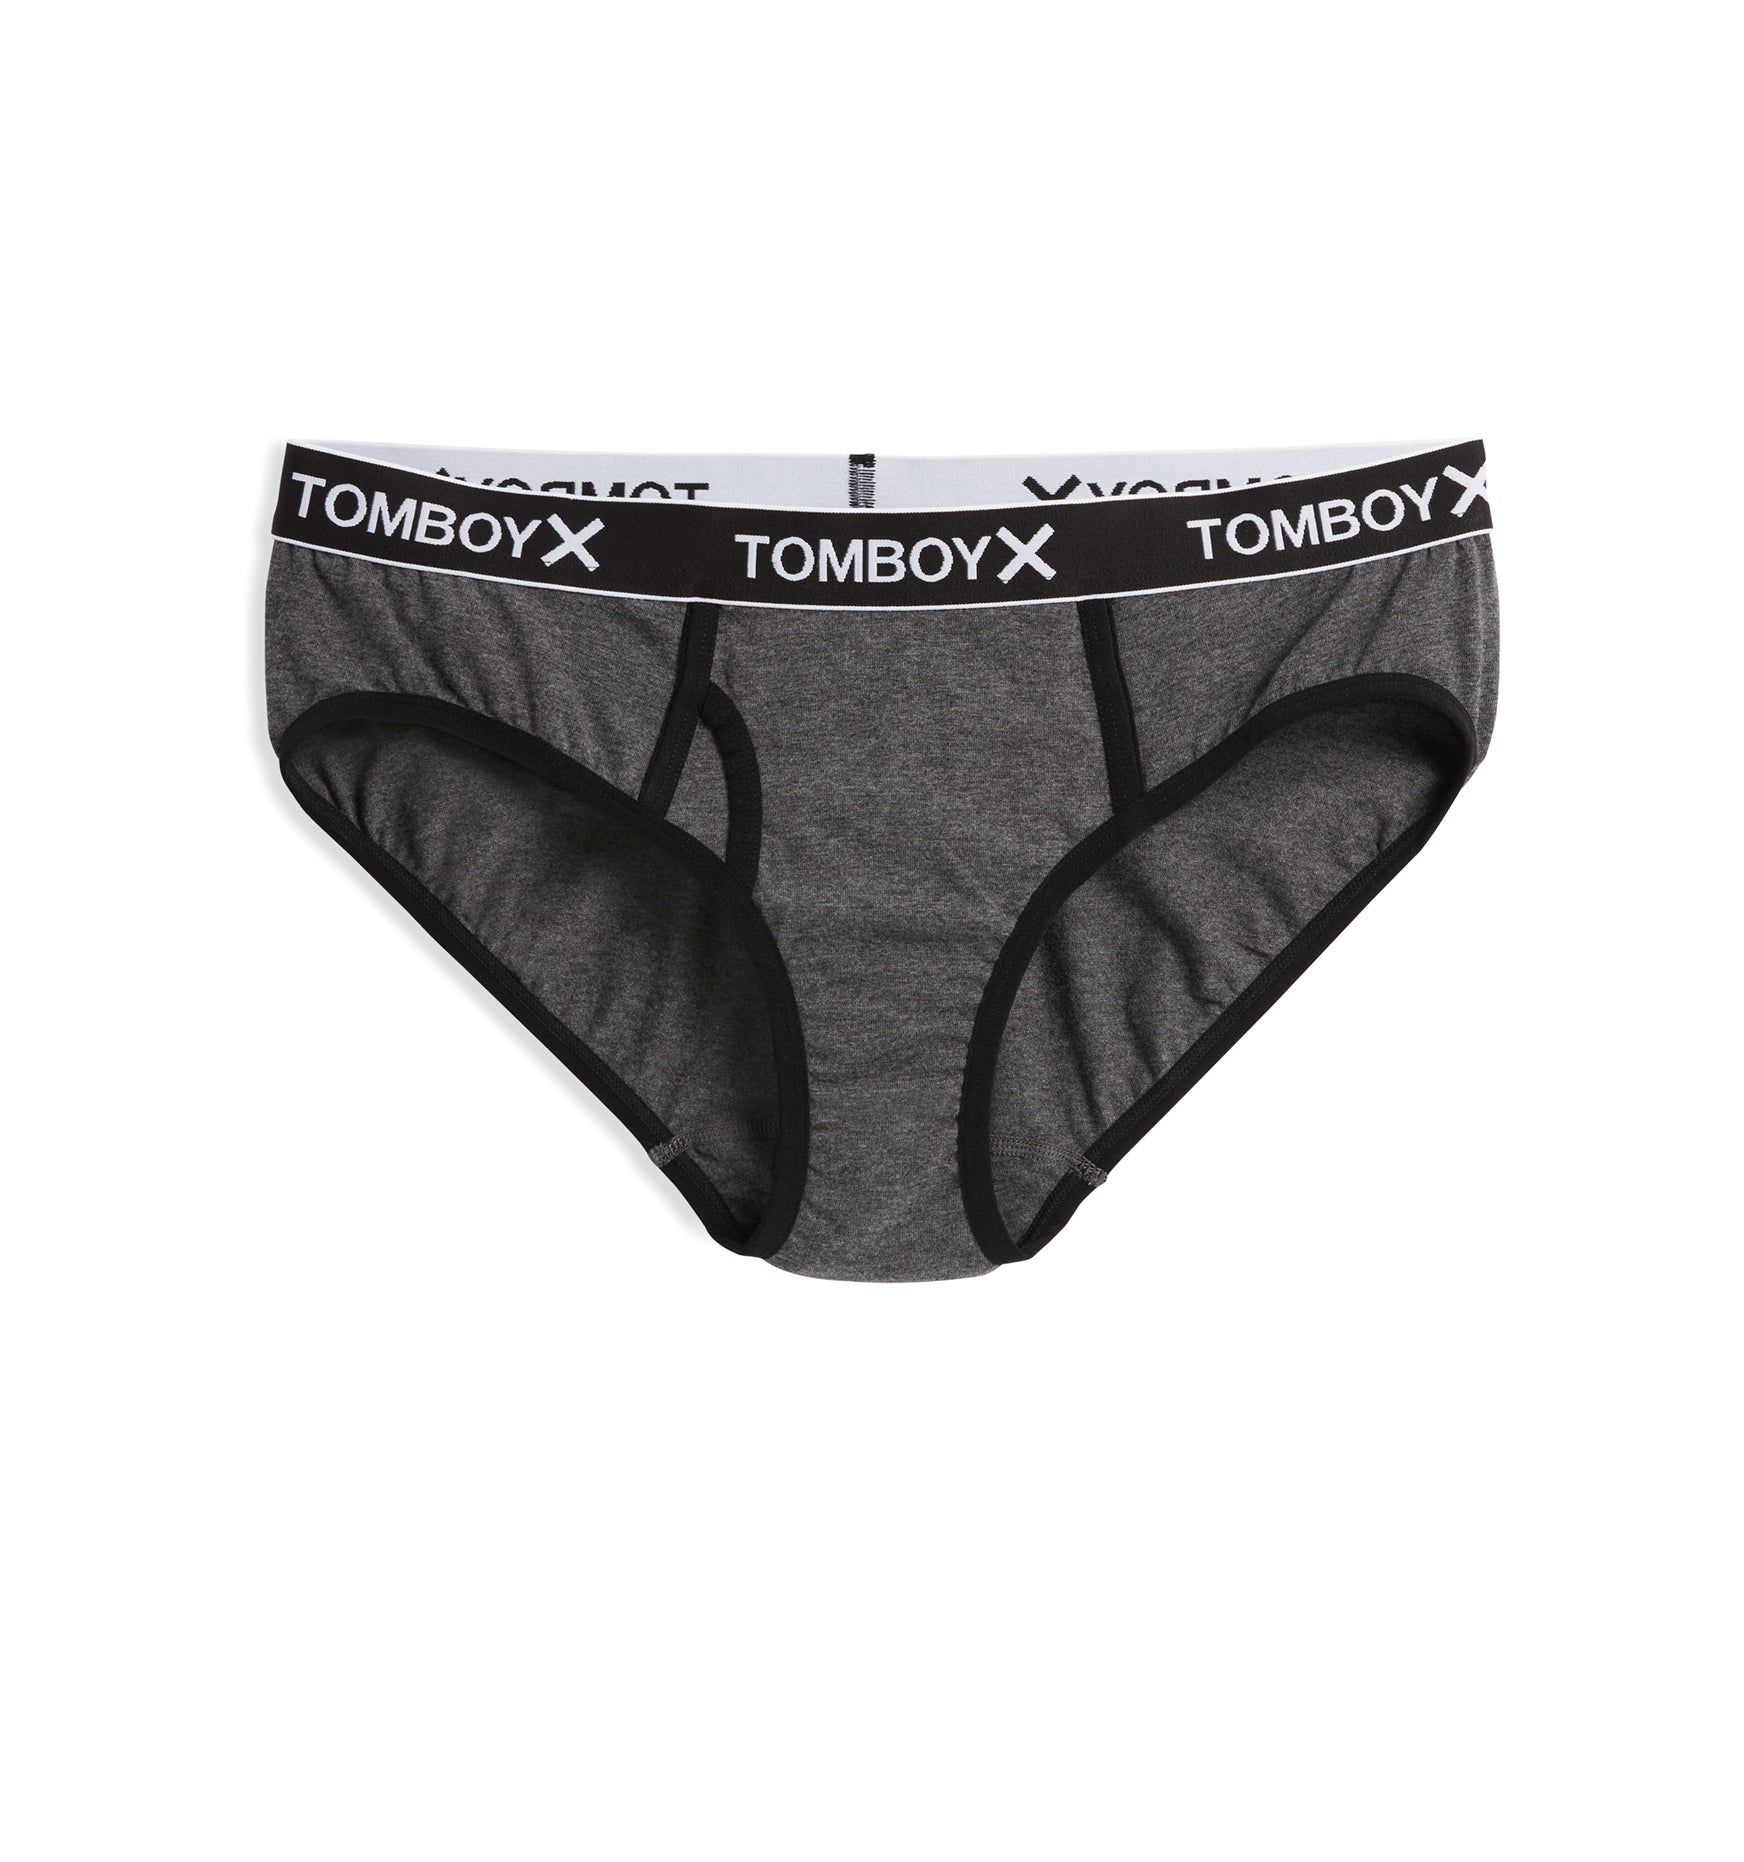 Tag: Tomboy Underwear, dapperQ